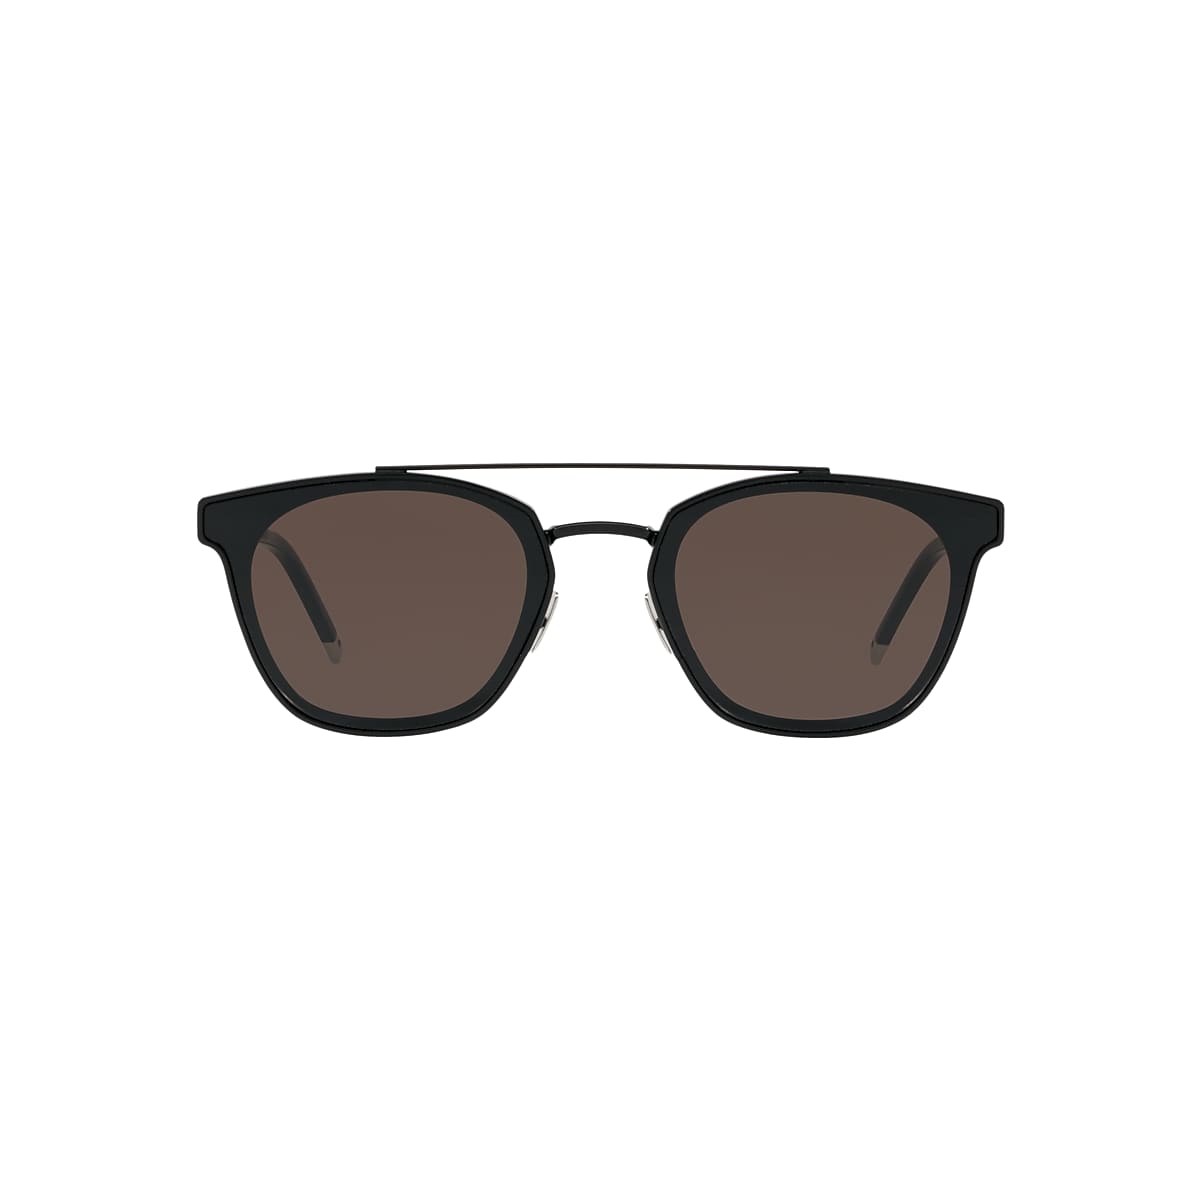 Saint Laurent SL 28 METAL 61 Grey & Black Matte Sunglasses